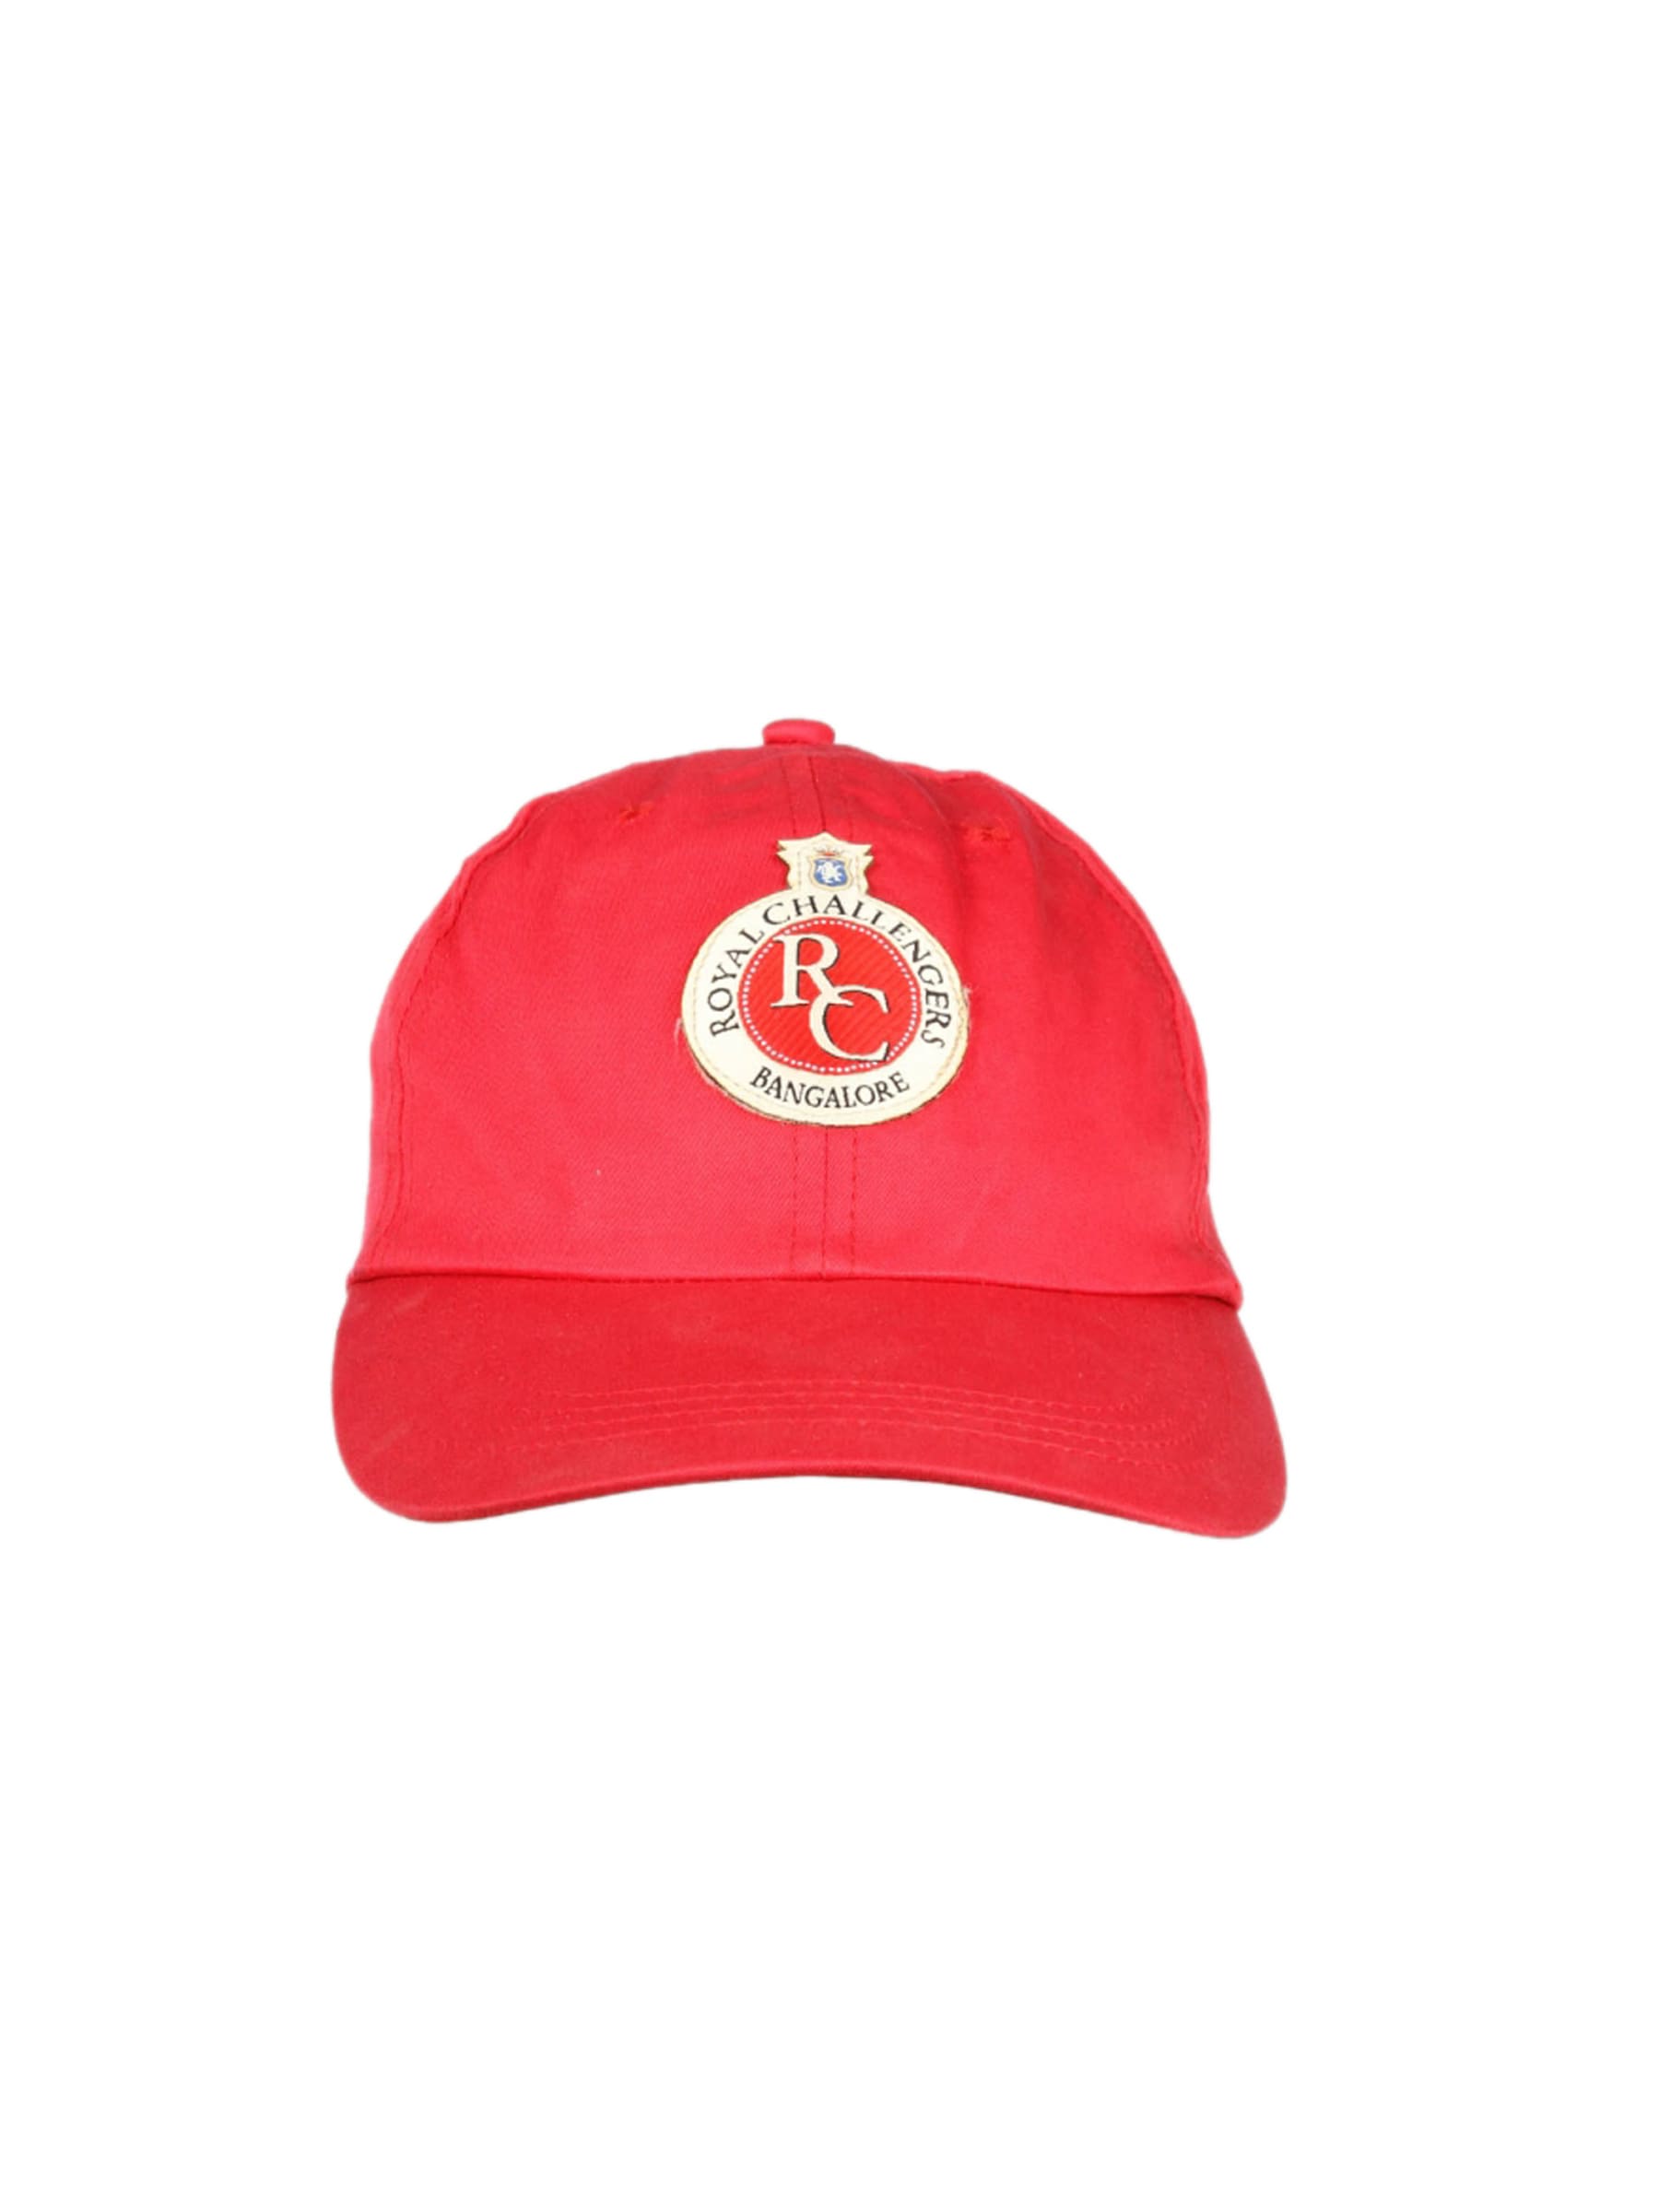 Reebok Royal Challengers Bangalore Fangear Red Cap